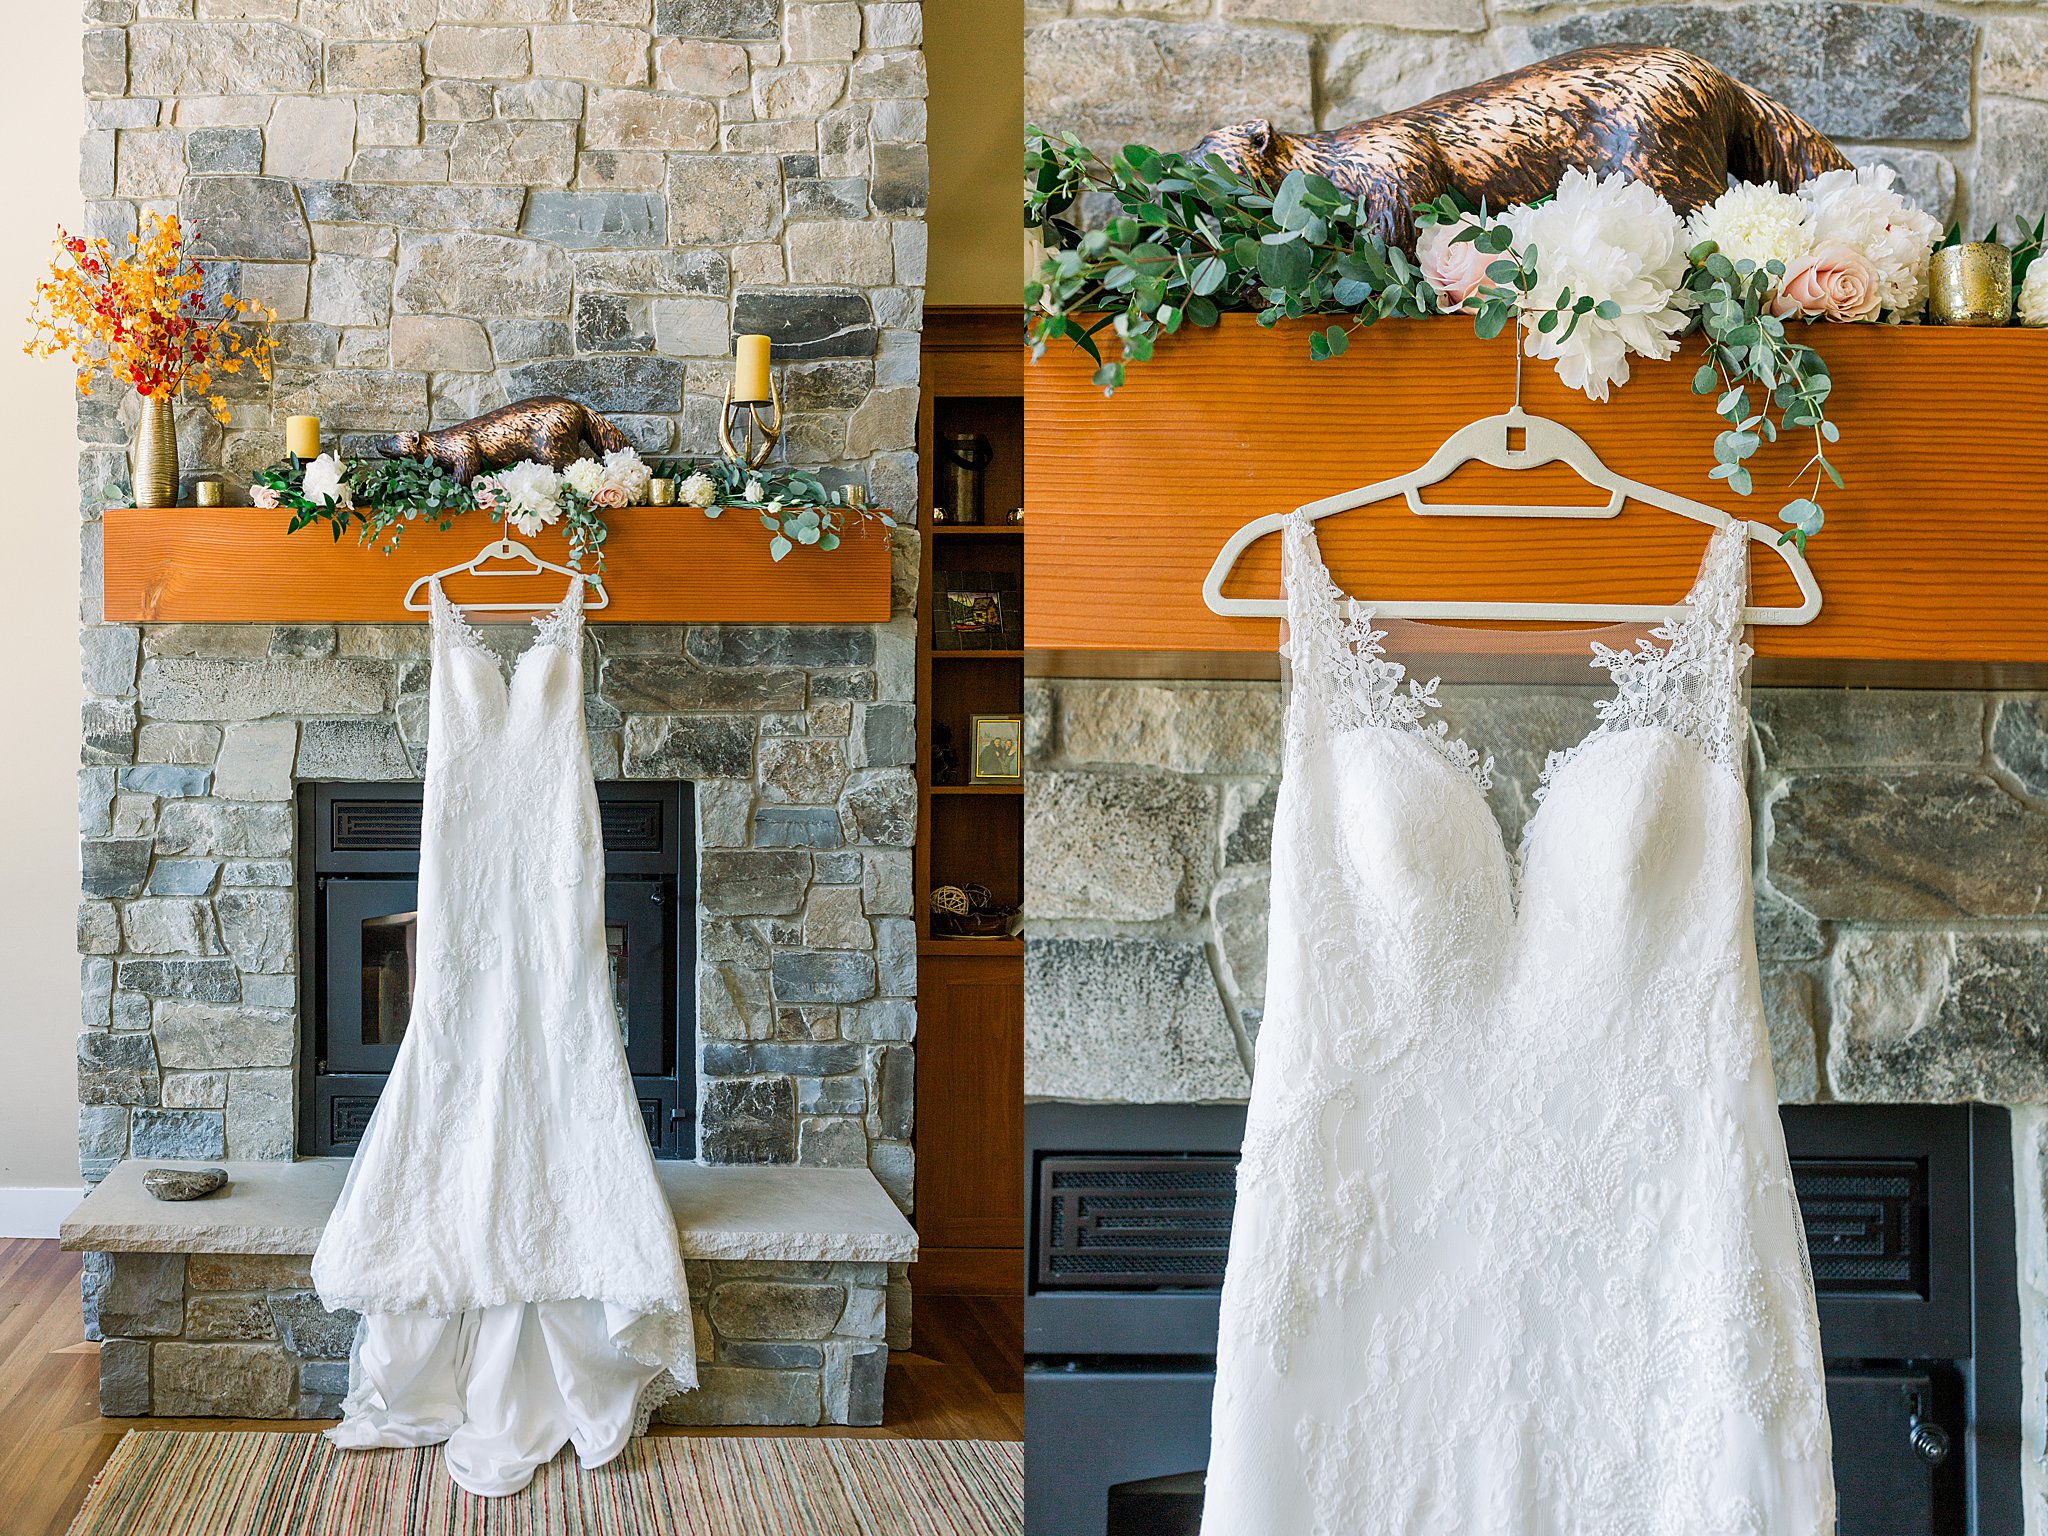 Dress hanging over fireplace at intimate Lake Michigan wedding